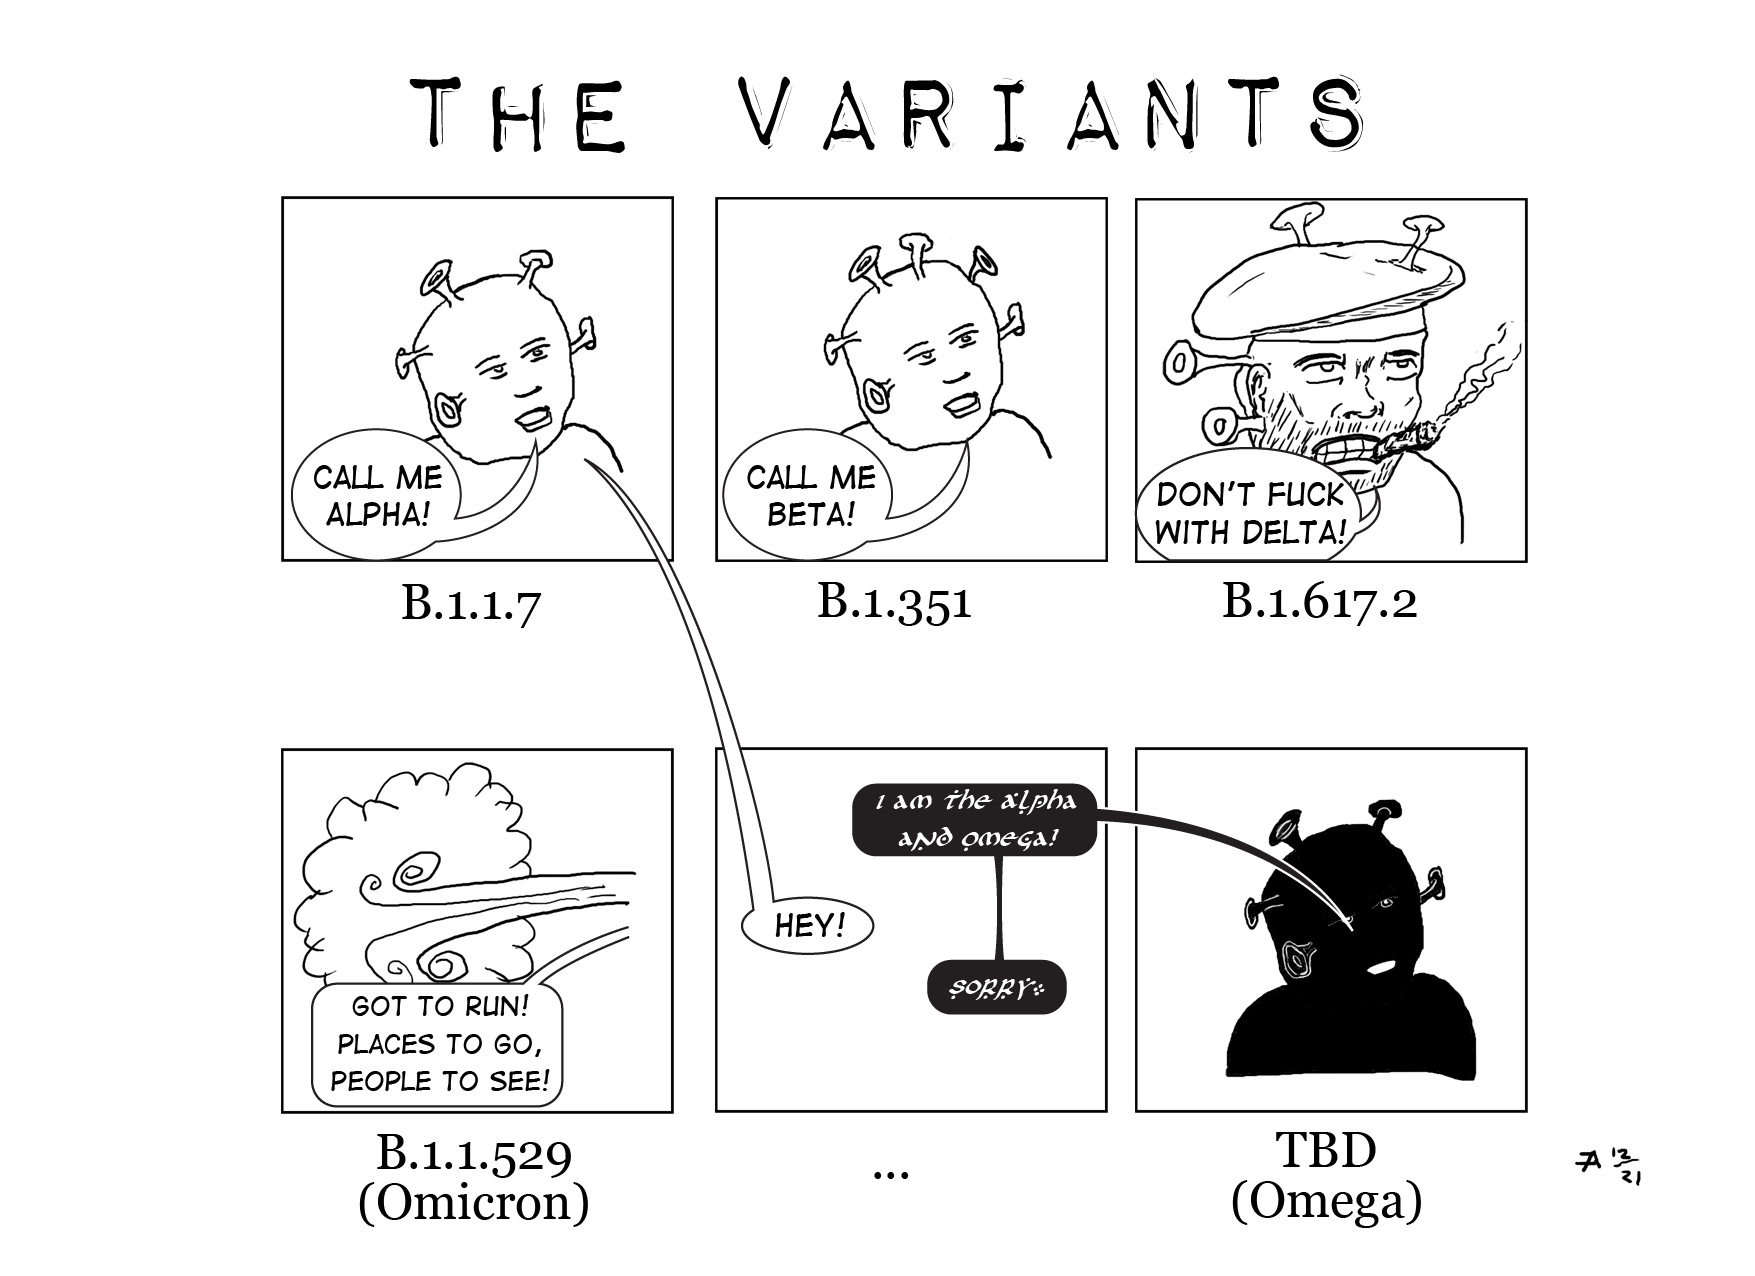 The Variants cartoon